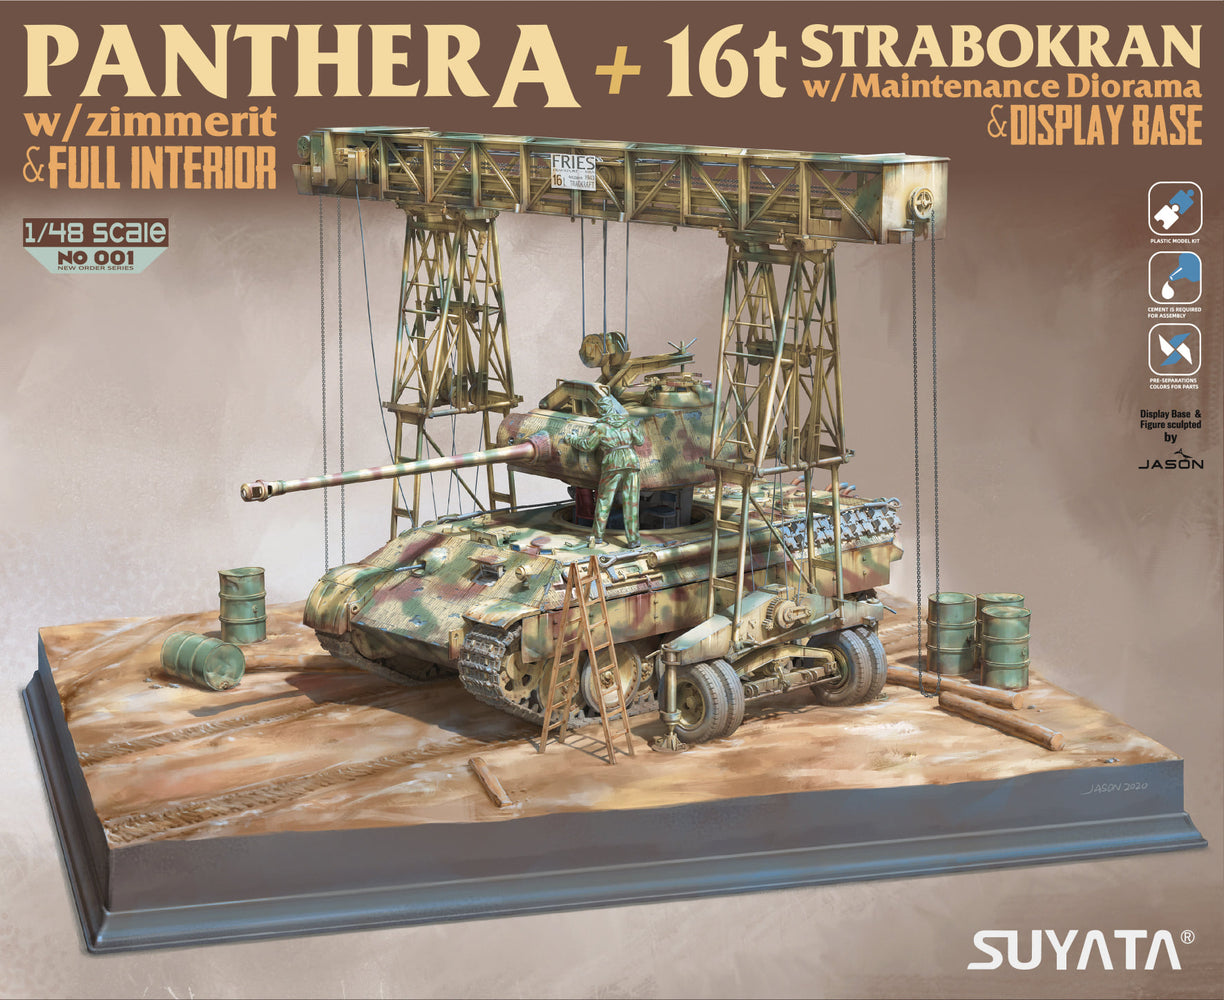 1/48 PANTHER A & 16t ATRABOKRAN w/ Diorama Base & Accessories Set by SUYATA